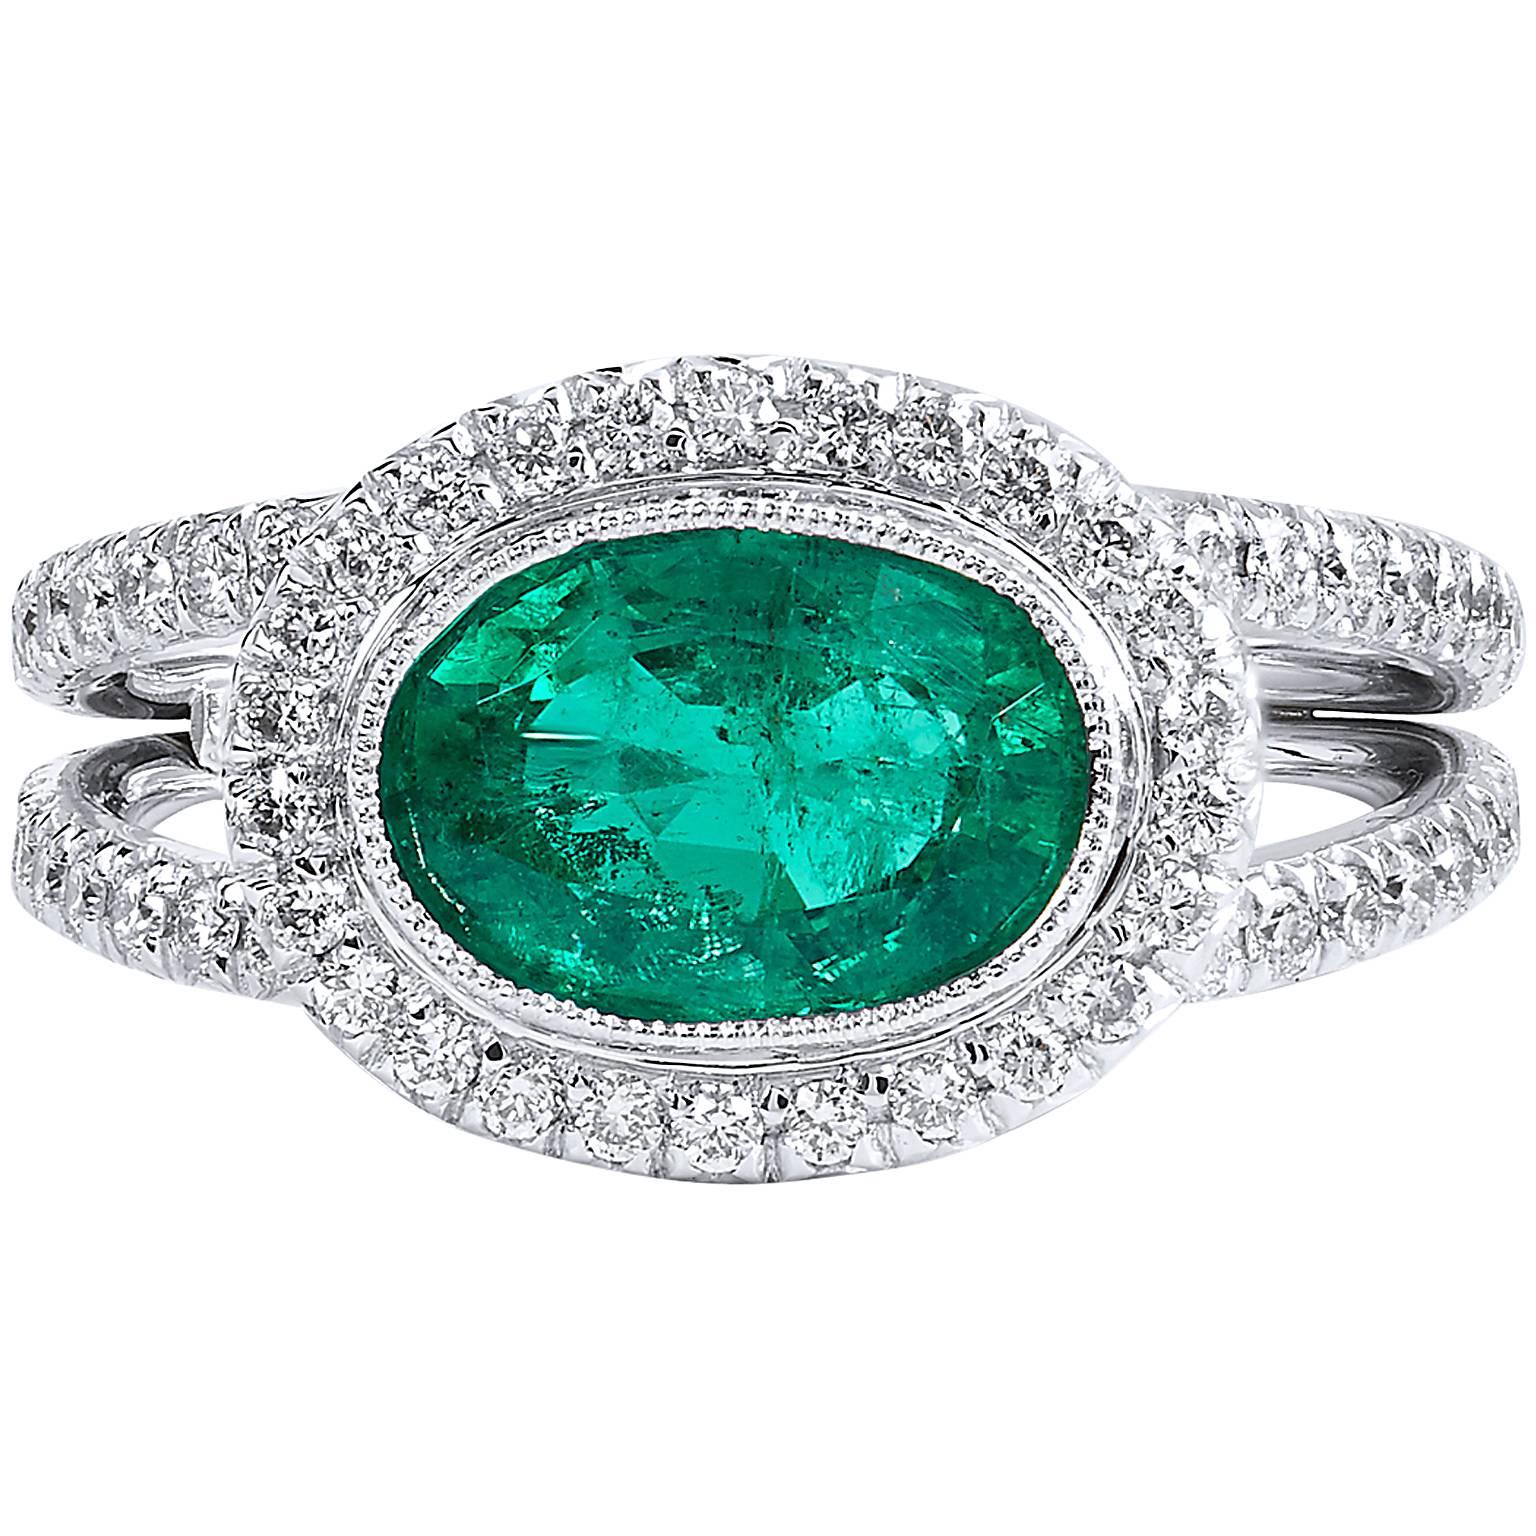 1.84 Carat Zambian Emerald Diamond Palladium Cocktail Ring